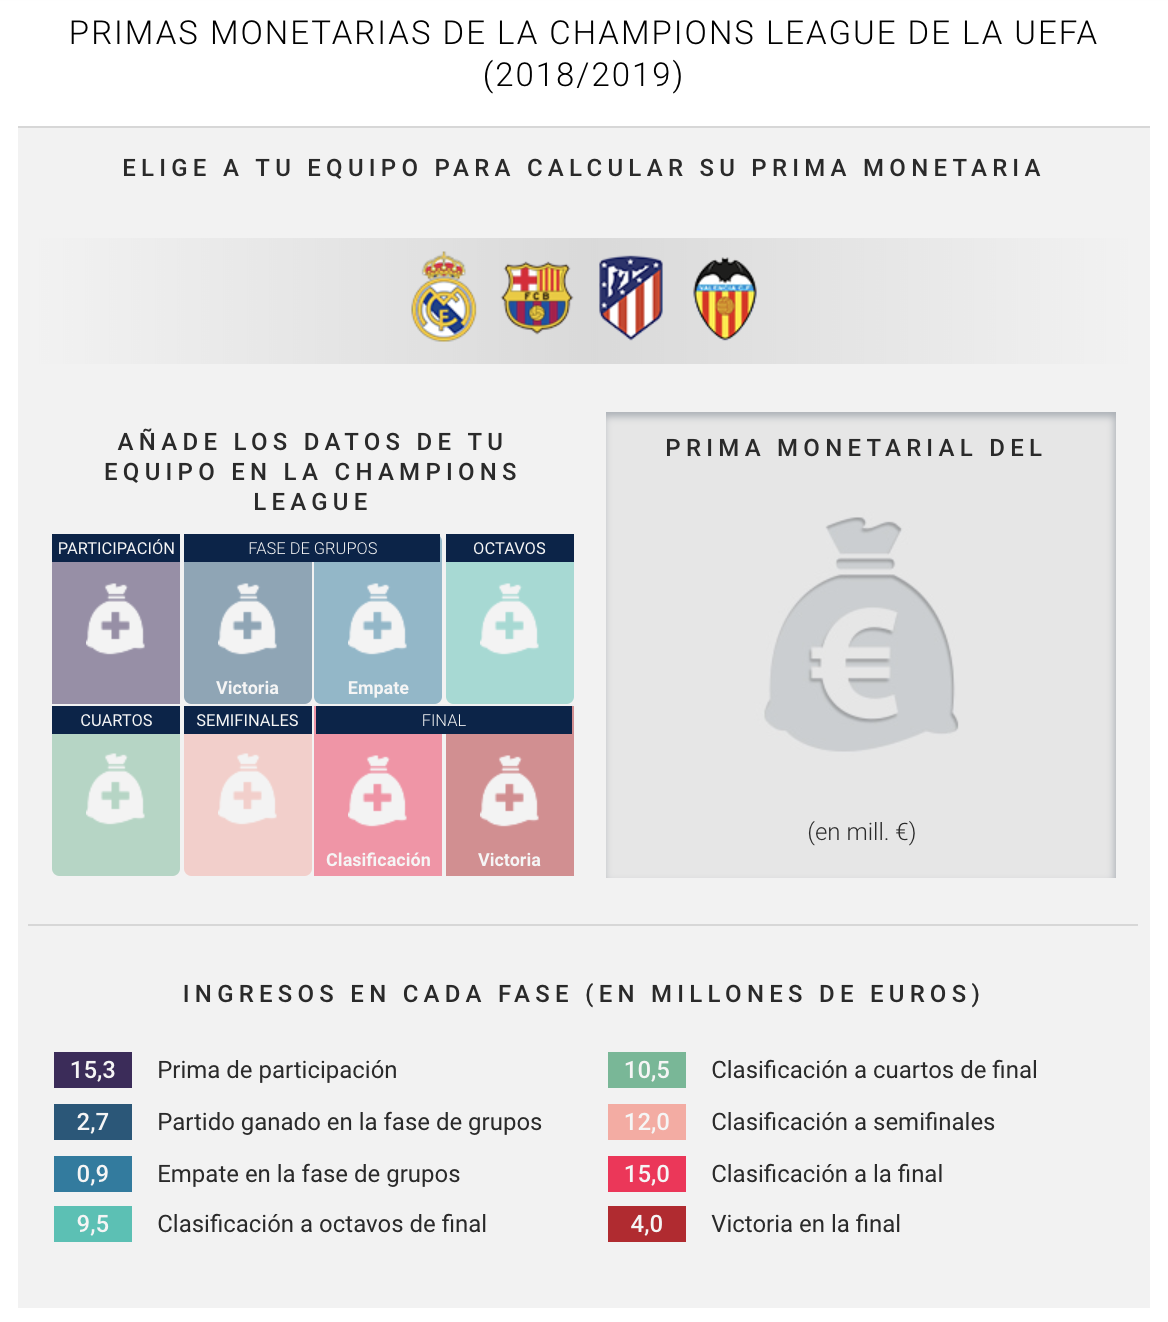 PRIMAS MONETARIAS DE LA CHAMPIONS LEAGUE DE LA UEFA 